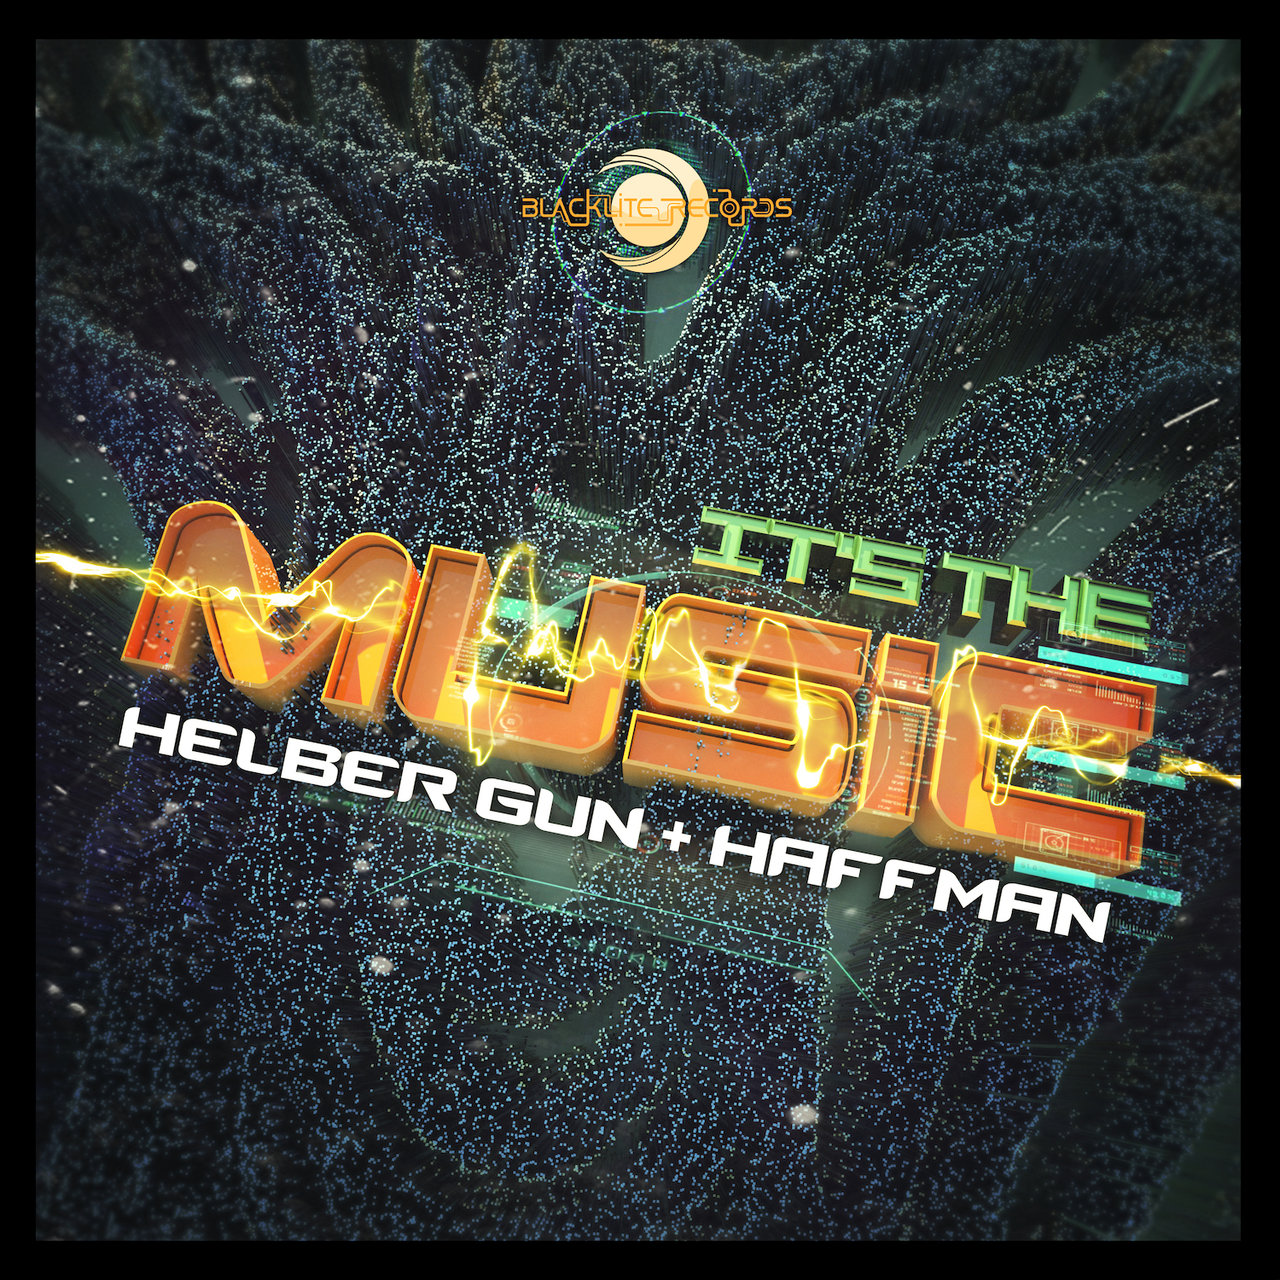 It's the Music - Helber Gun, Haffman